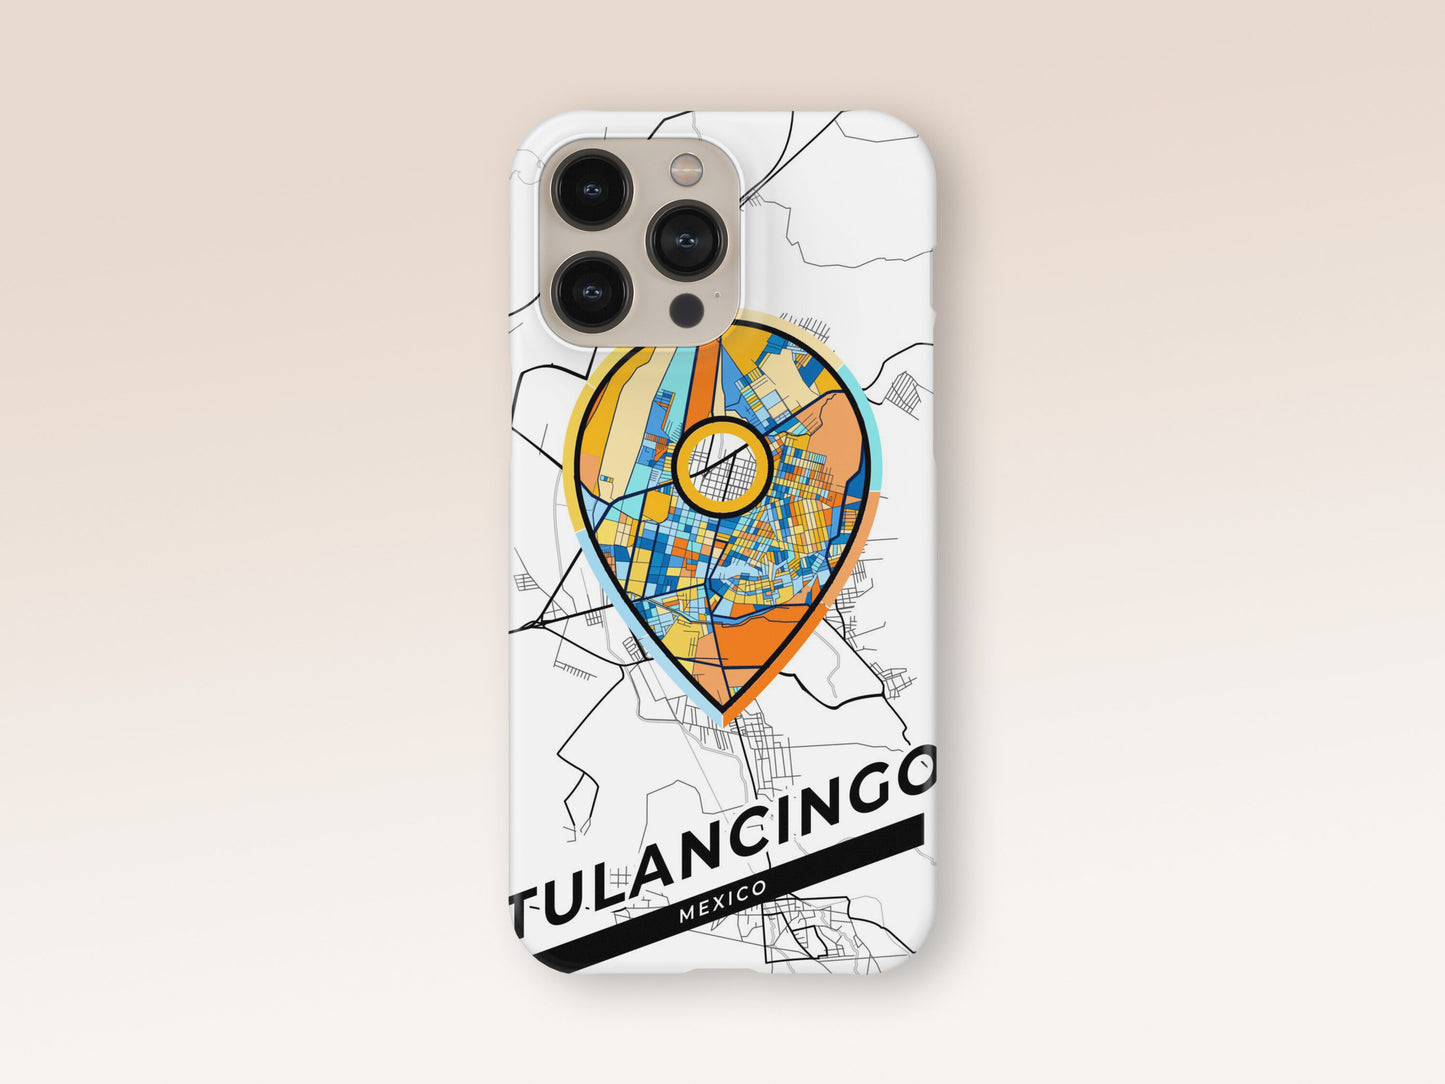 Tulancingo Mexico slim phone case with colorful icon 1